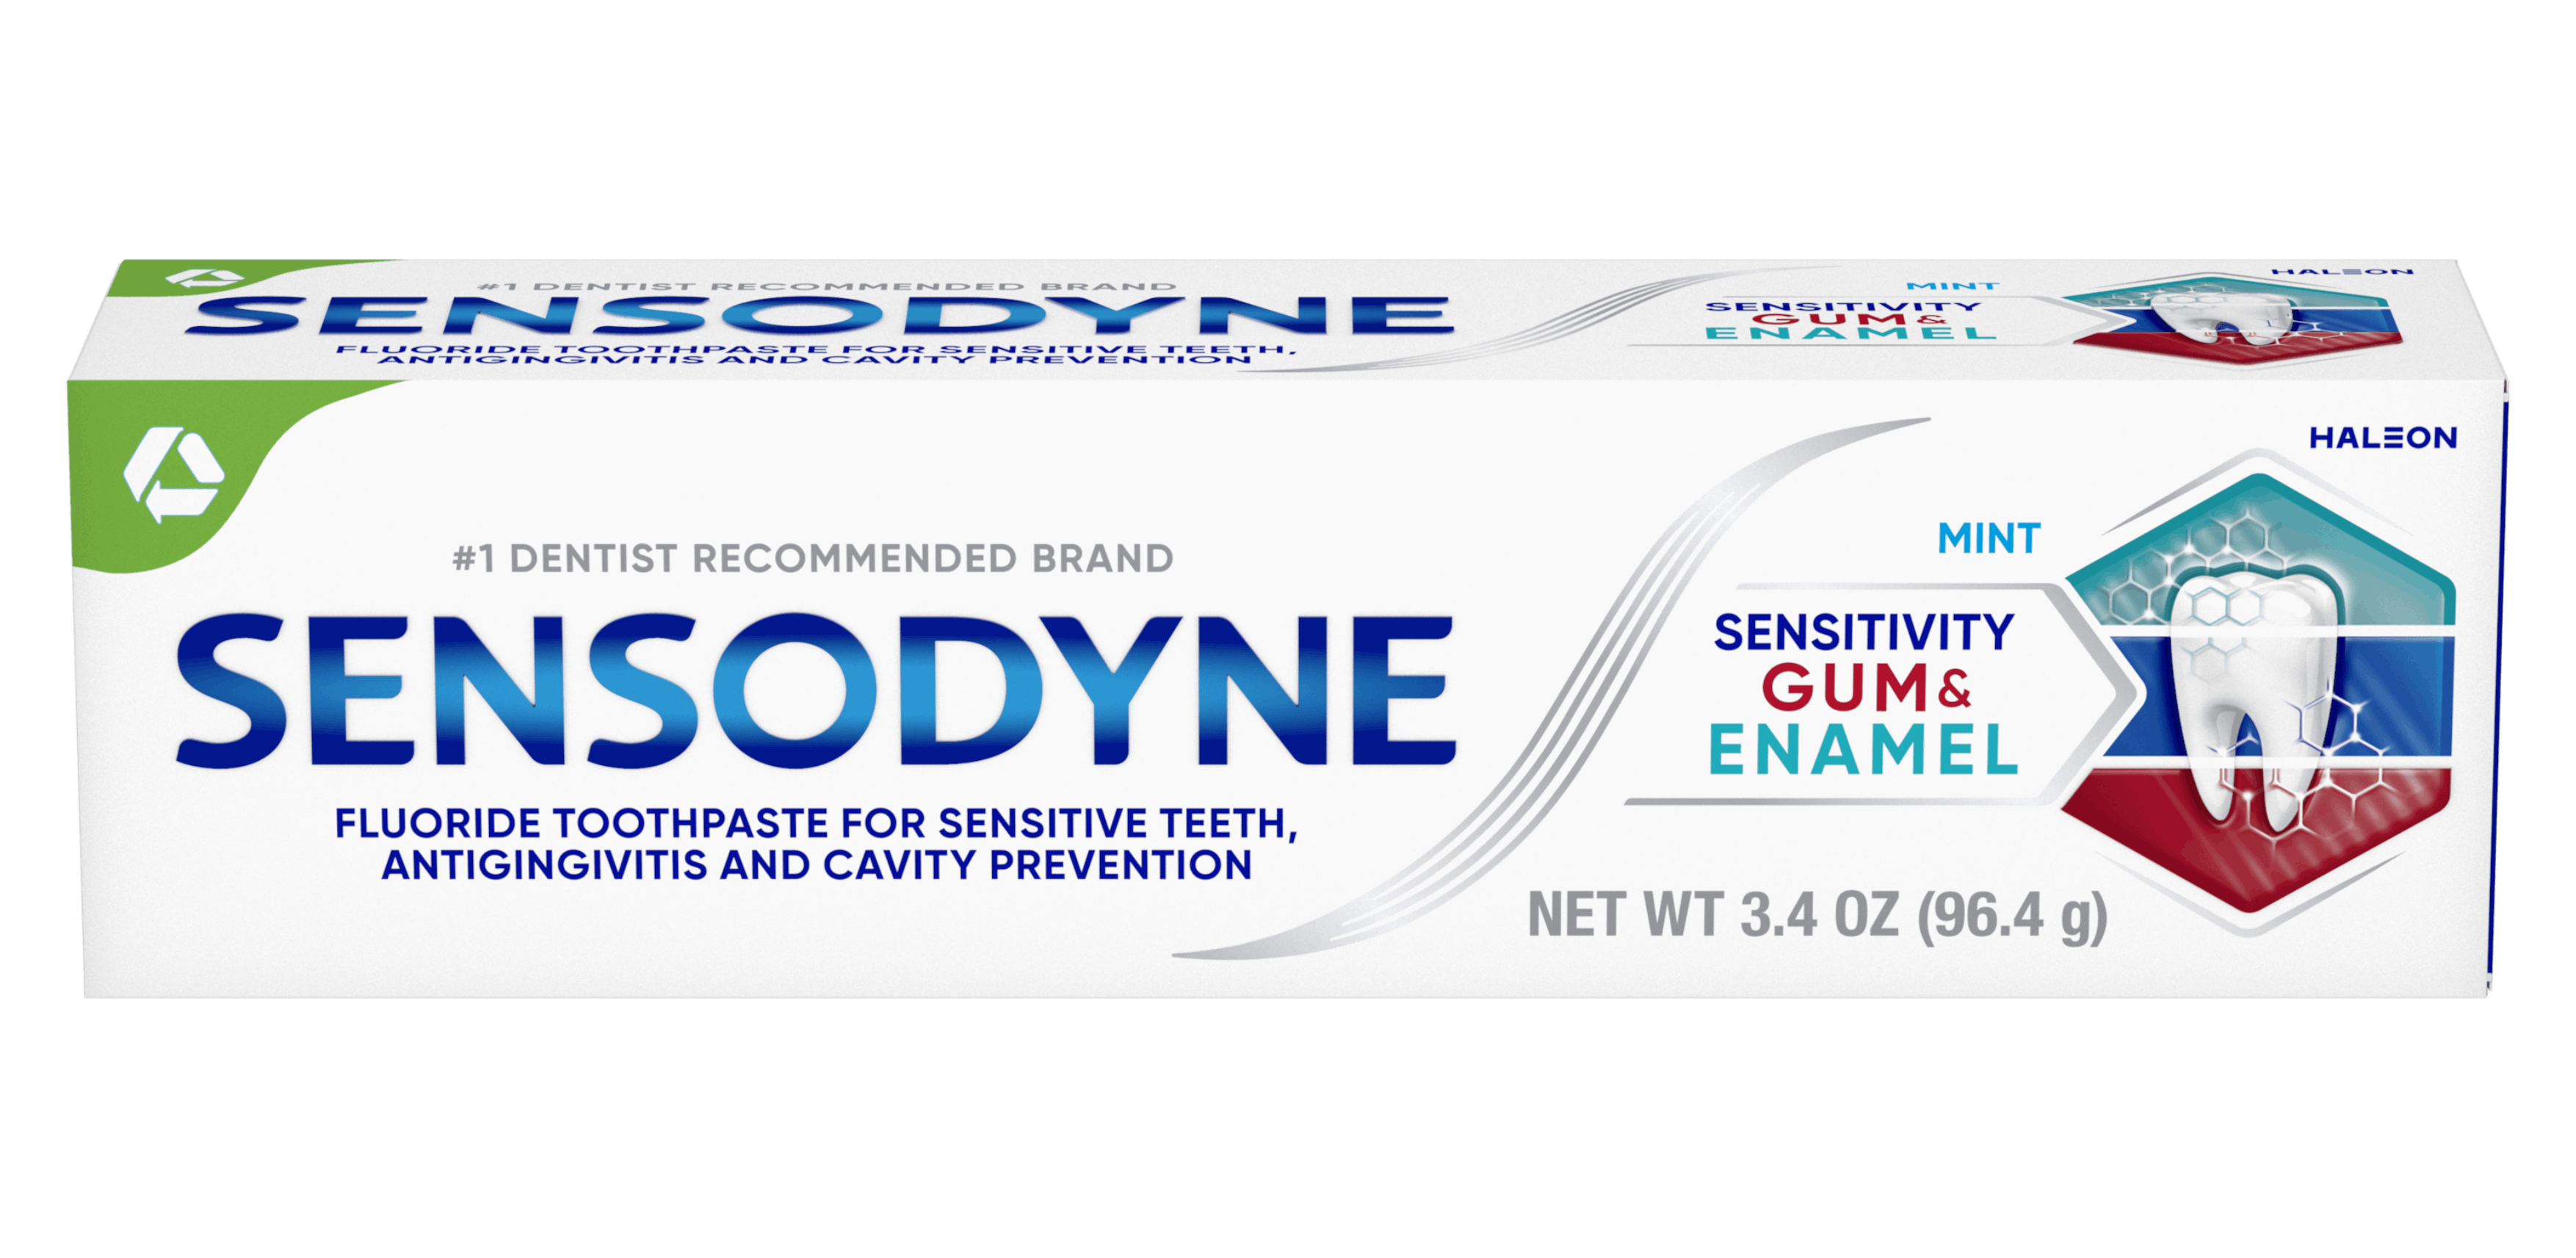 Sensodyne Sensitivity Gum & Enamel Toothpaste Pack